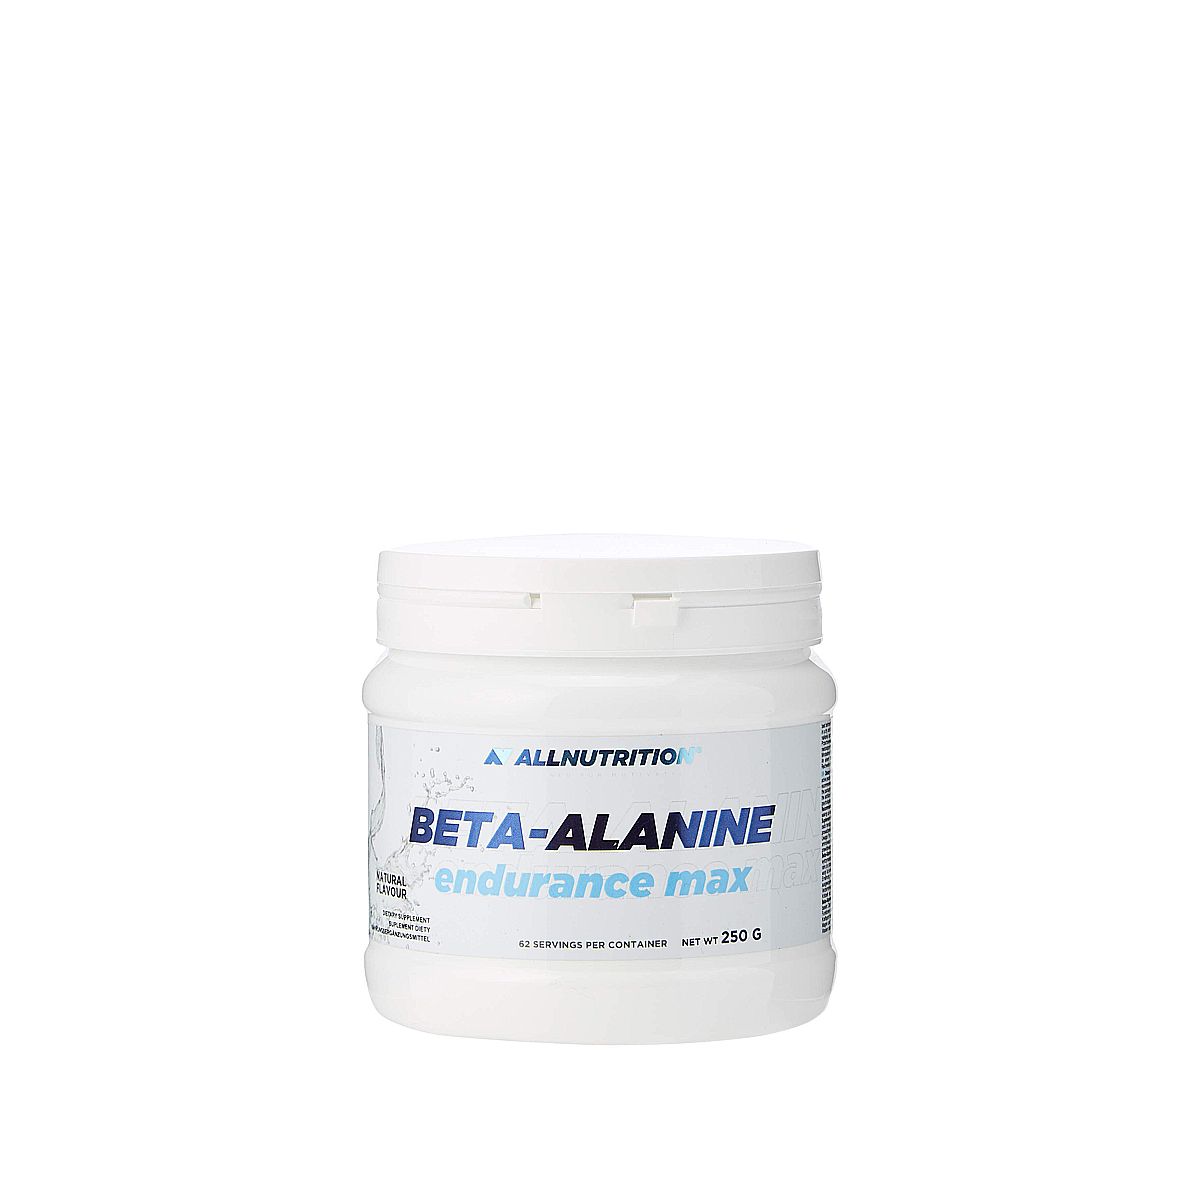 ALLNUTRITION - BETA-ALANINE ENDURANCE MAX - 250 G